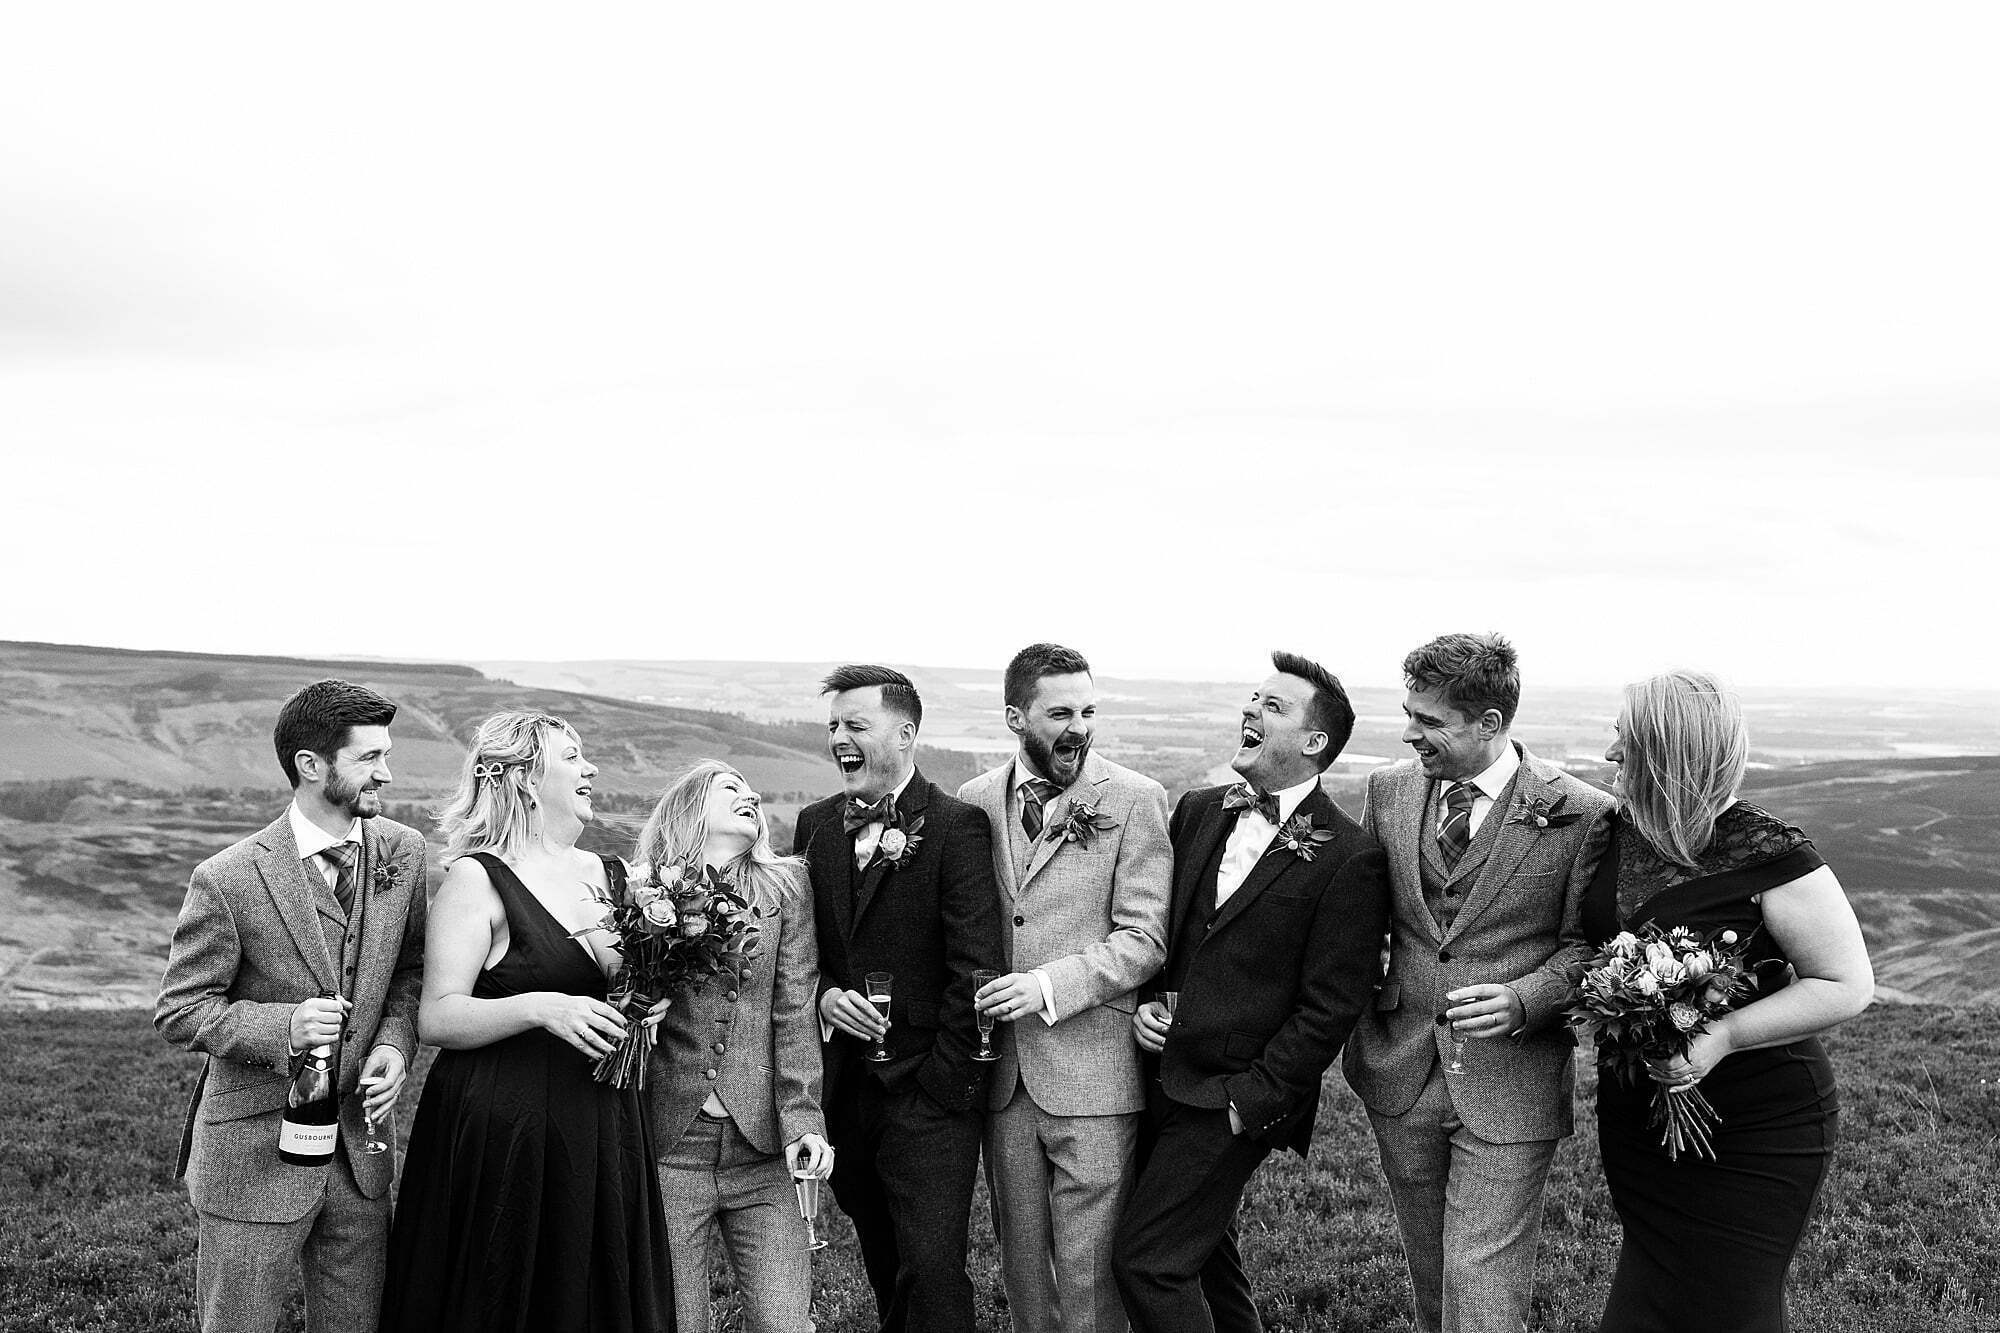 Cairn o' Mount family portraits group photos groomsmen groomswomen